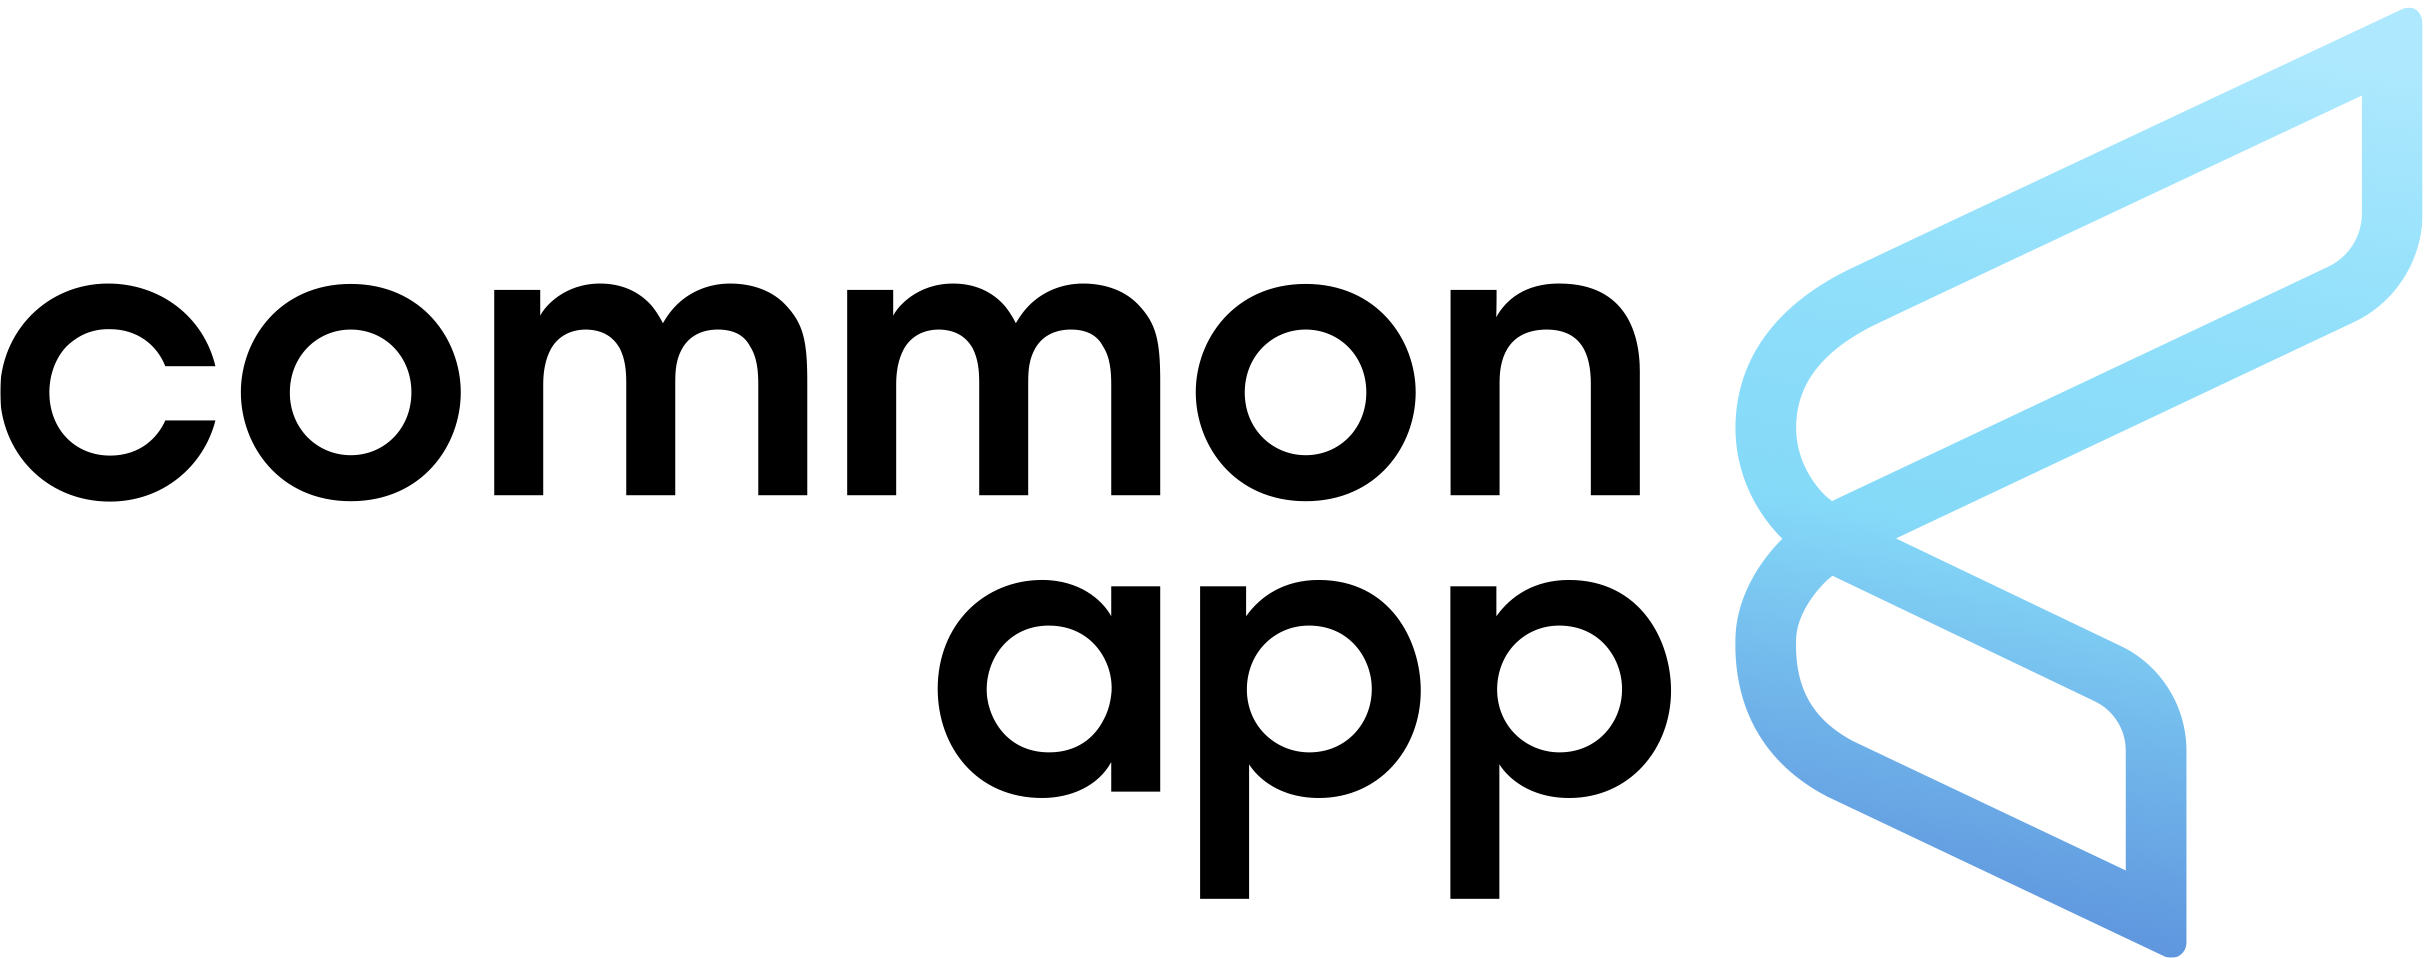 common app essay prompt examples